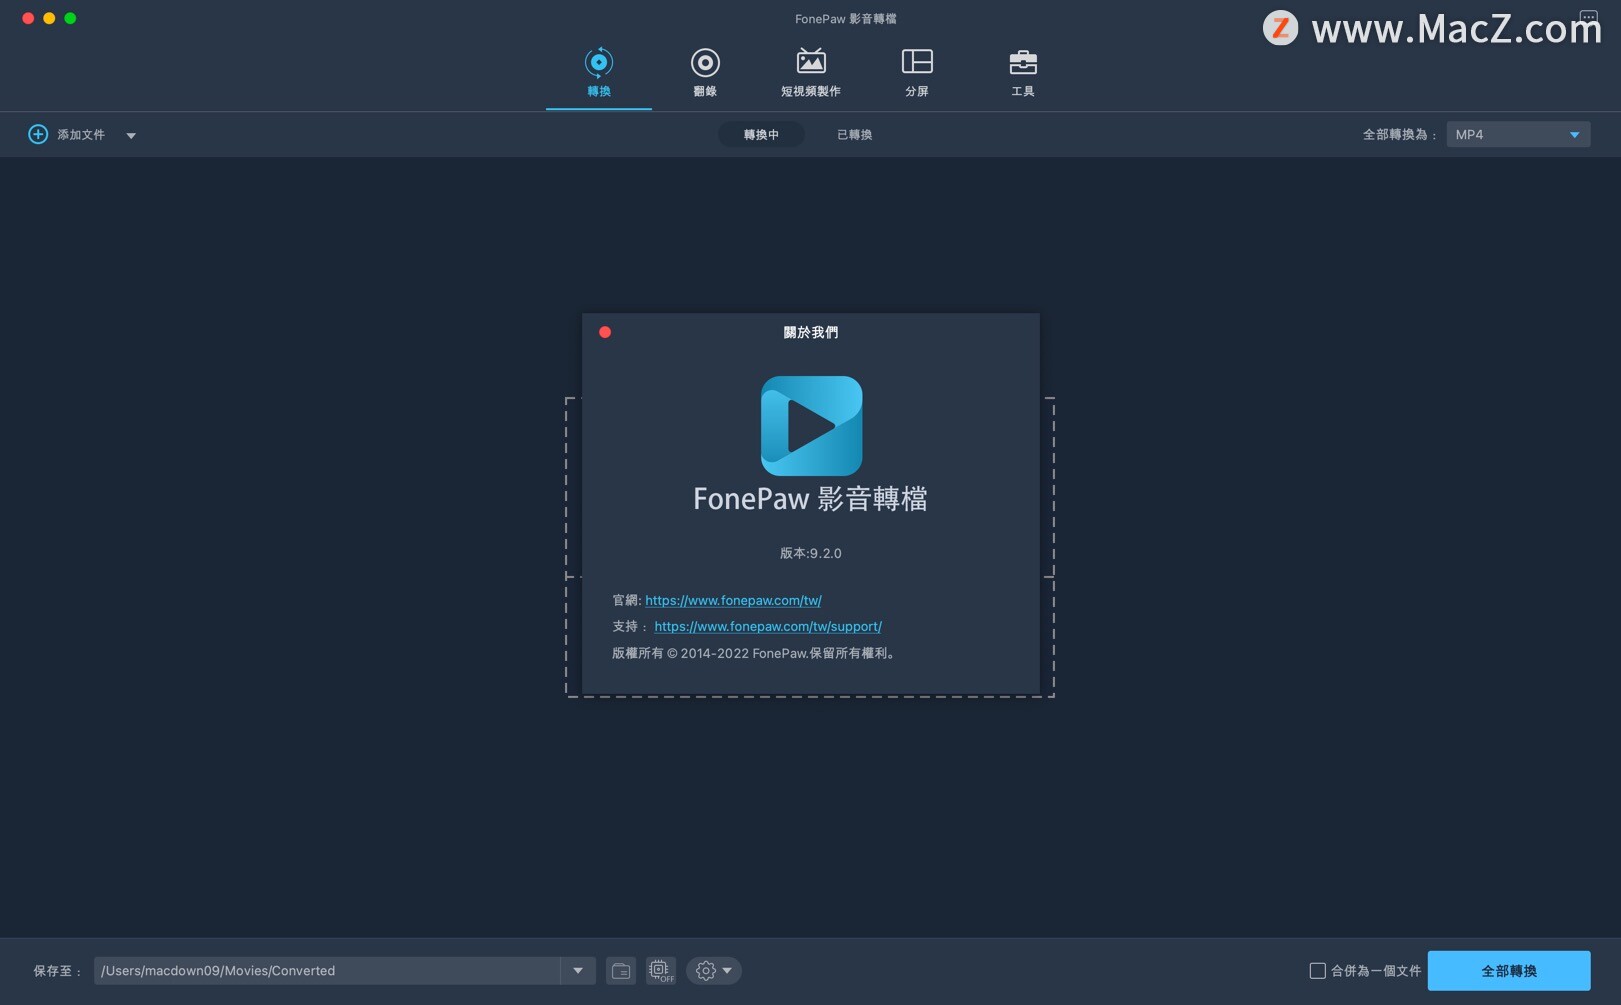 FonePaw Video Converter Ultimate 8.2 for windows instal